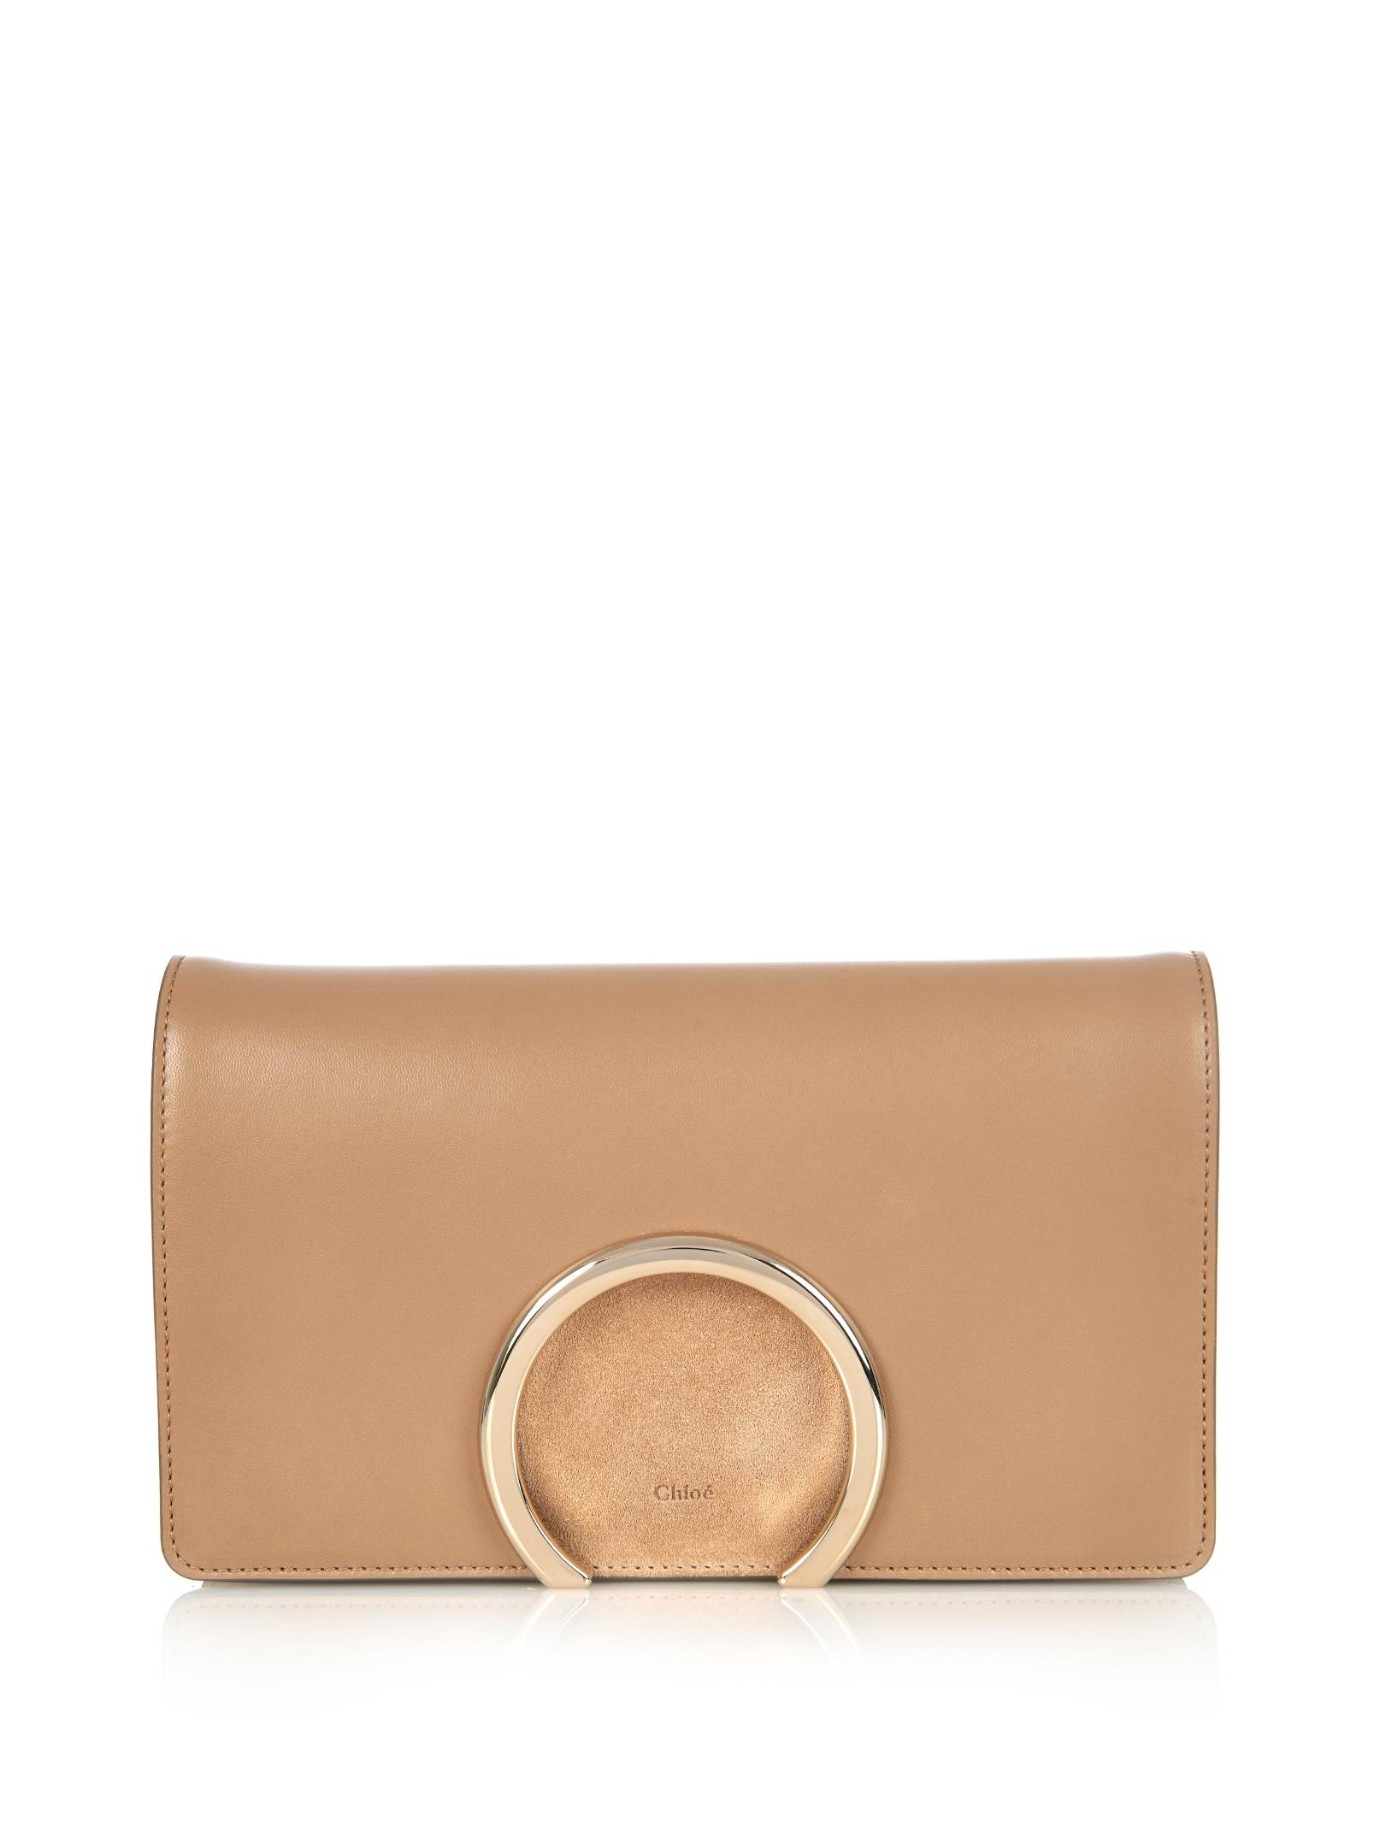 chloe hand bag - Chlo Gabrielle Leather And Suede Clutch in Beige (DARK BEIGE) | Lyst